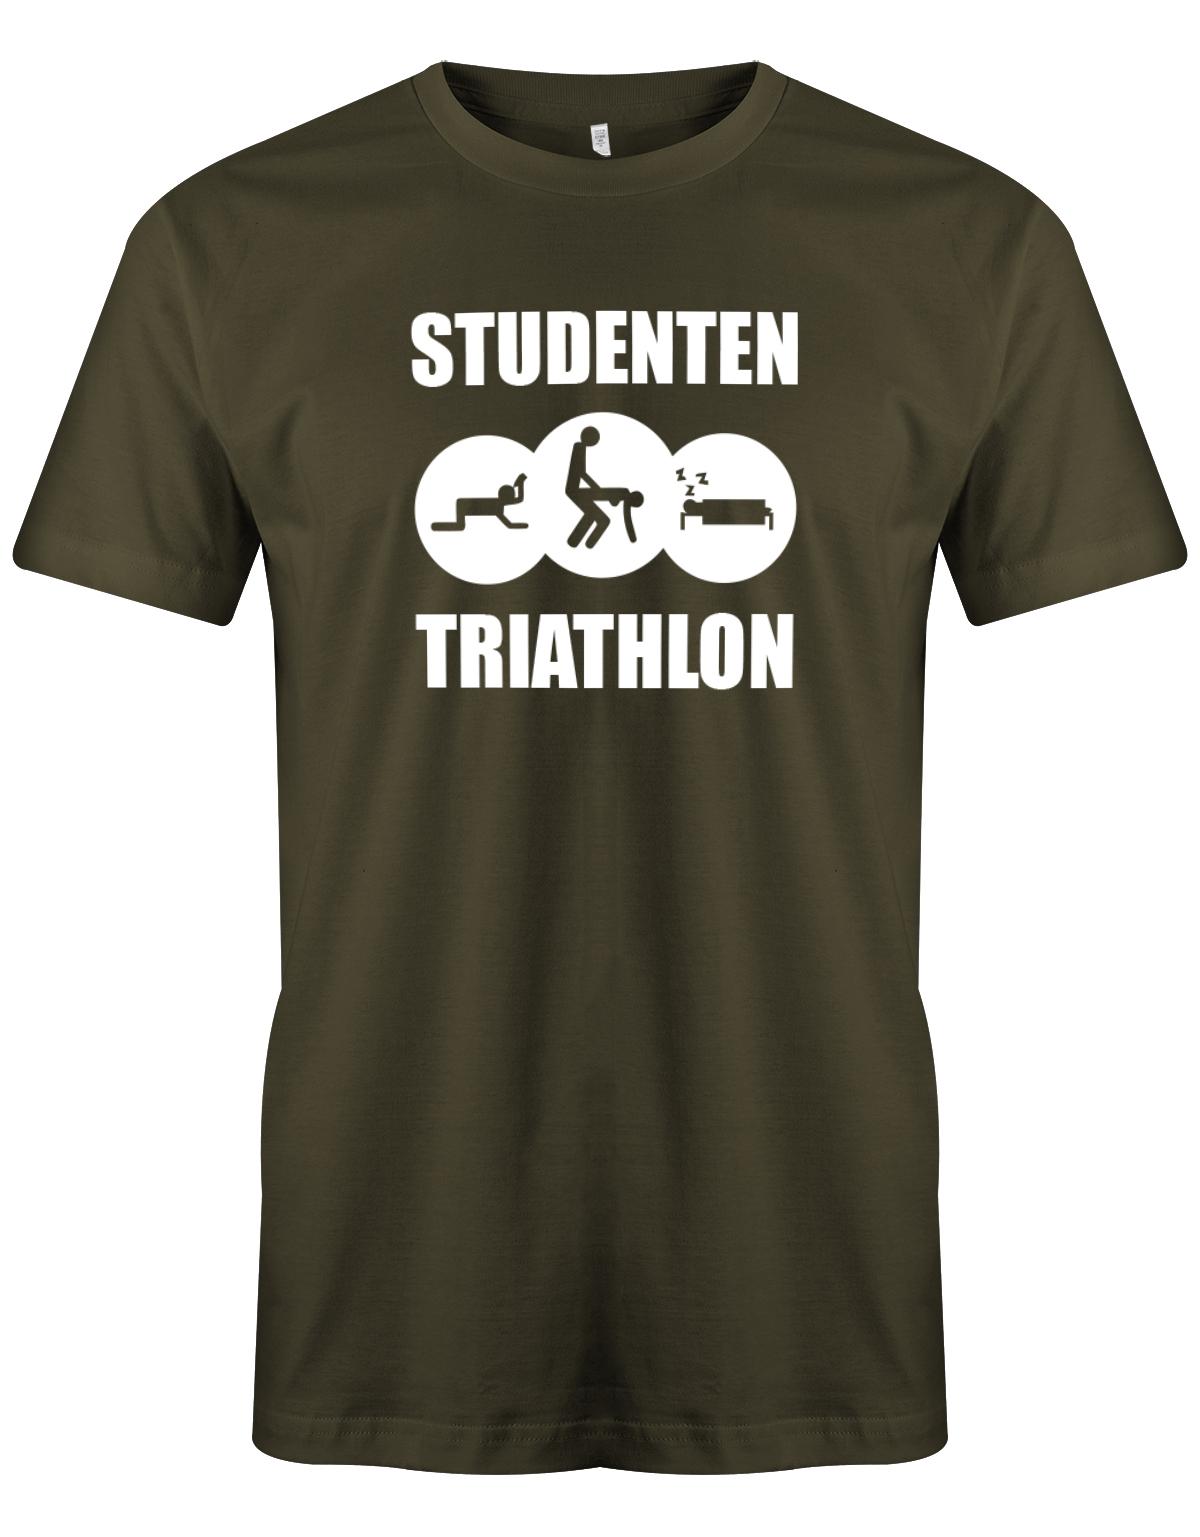 Studenten-Triahtlon-Herren-Shirt-Army